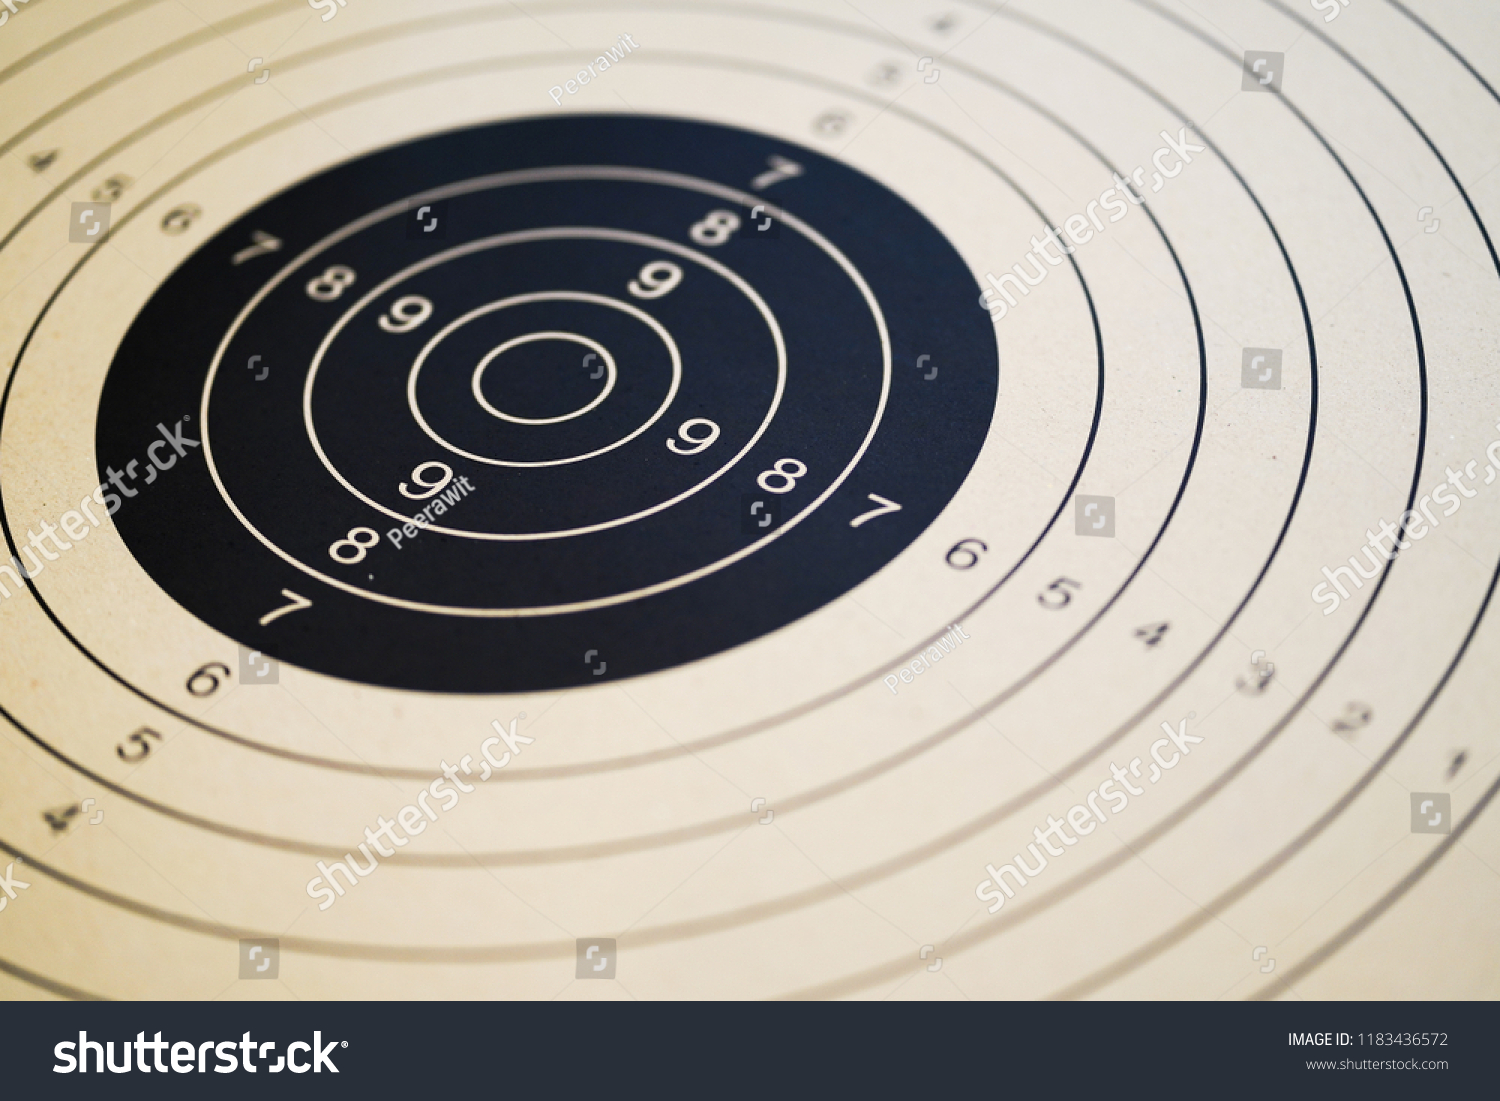 printable shooting targets gun targets stock photo 1183436572 shutterstock